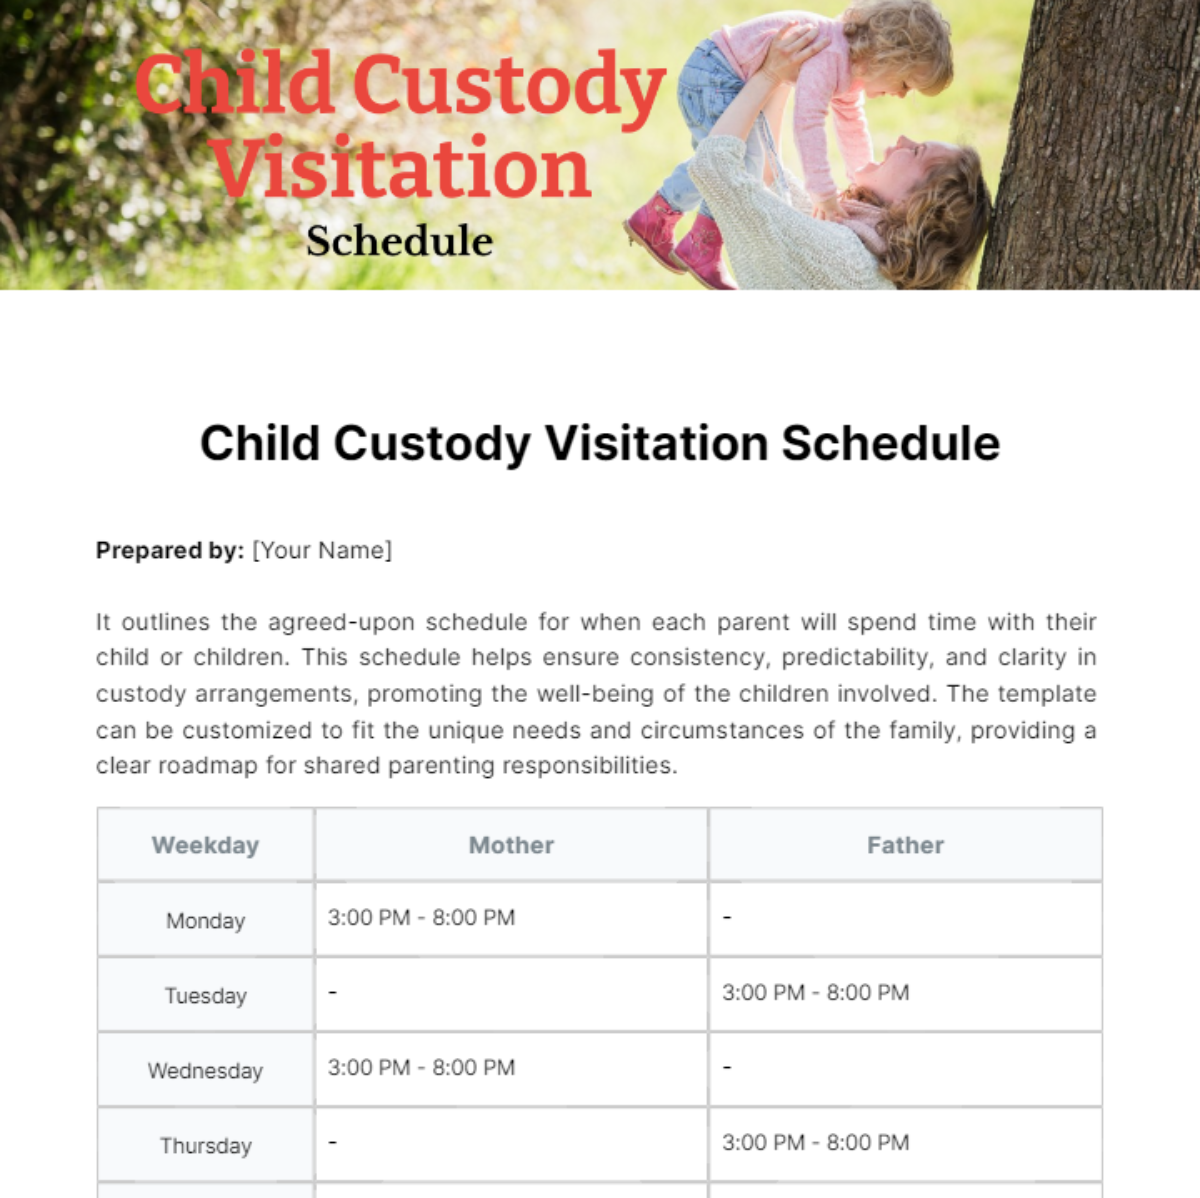 Child Custody Visitation Schedule Template